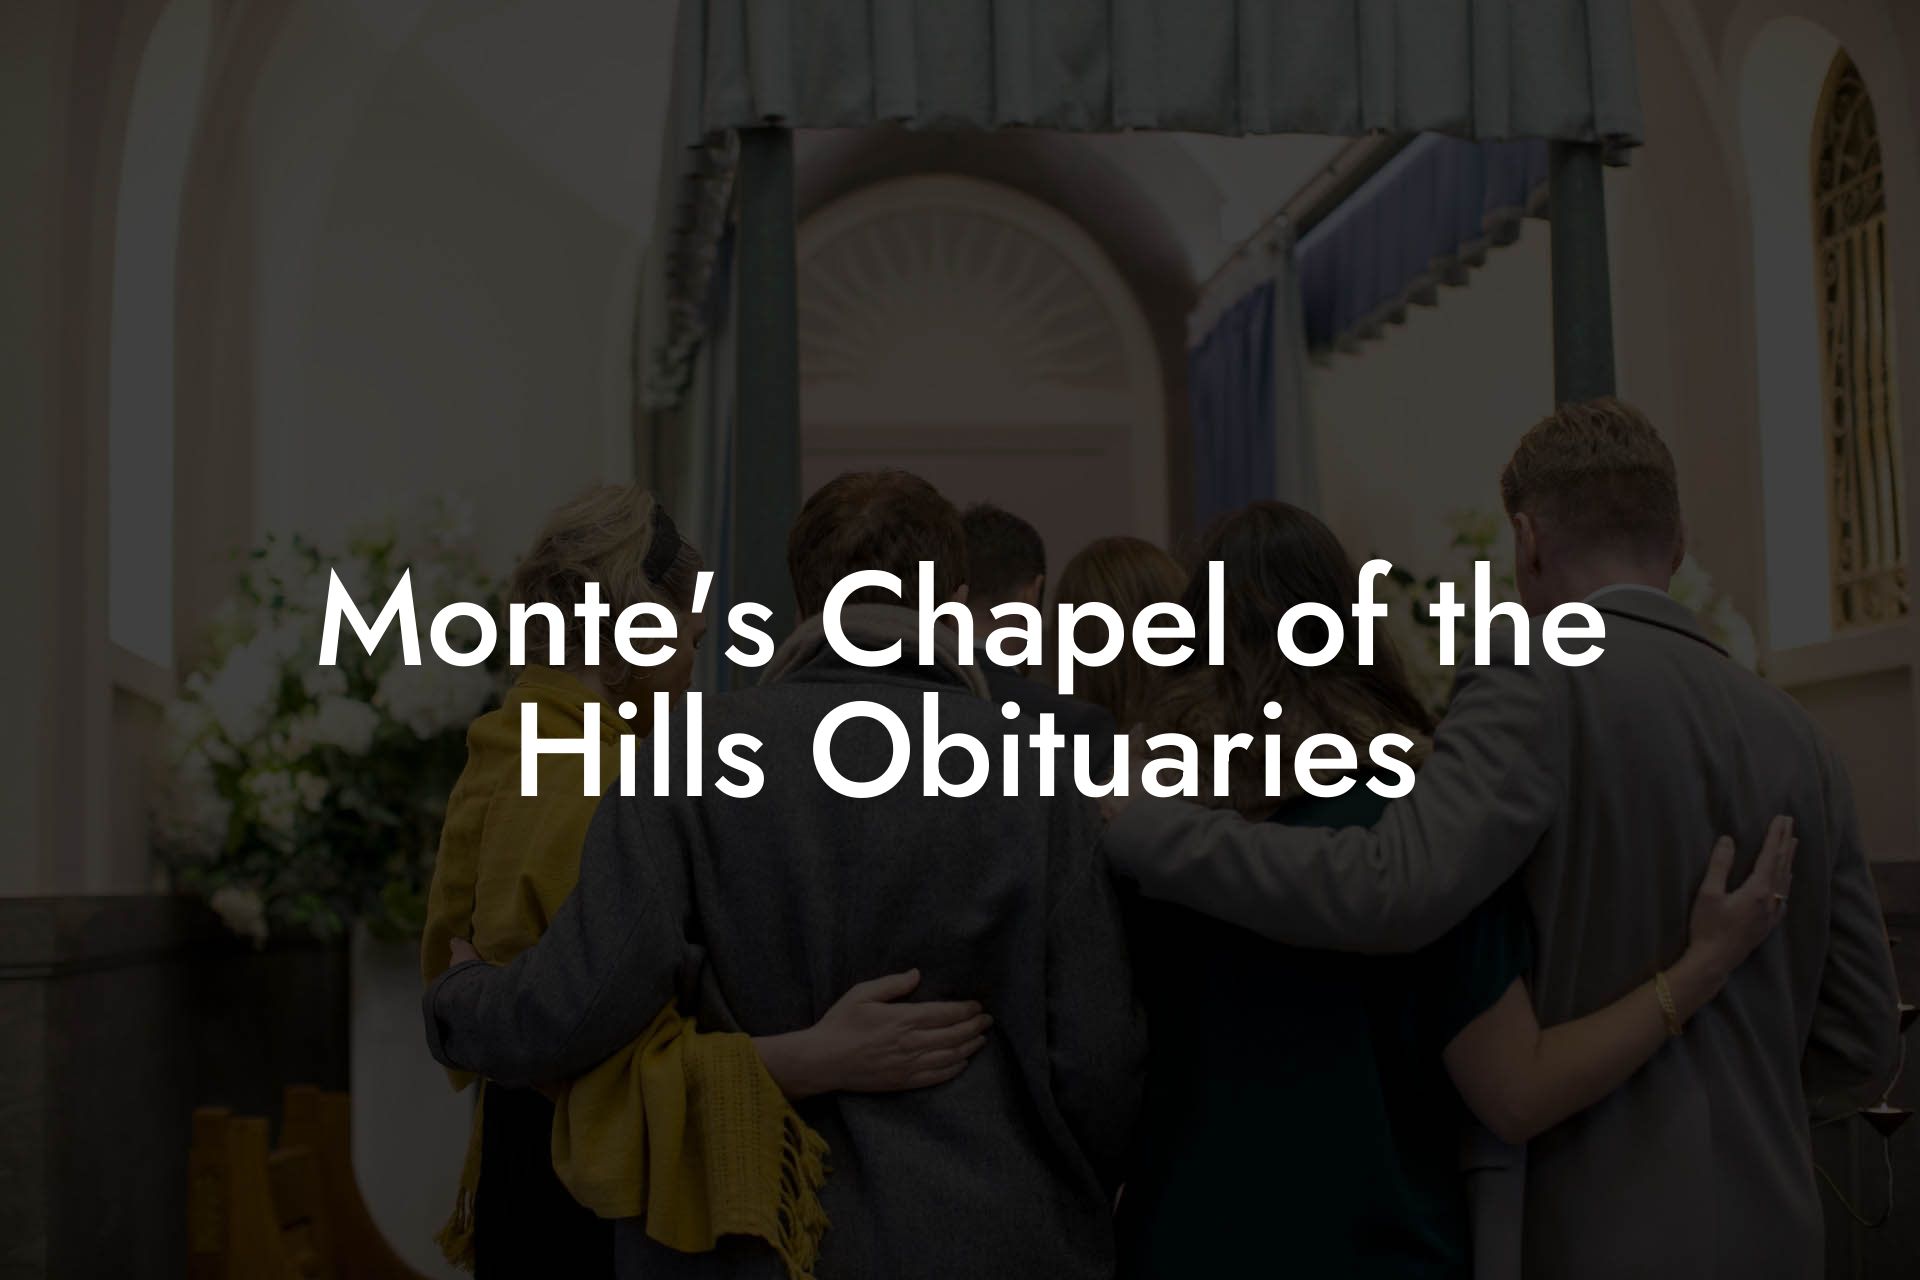 Monte's Chapel of the Hills Obituaries